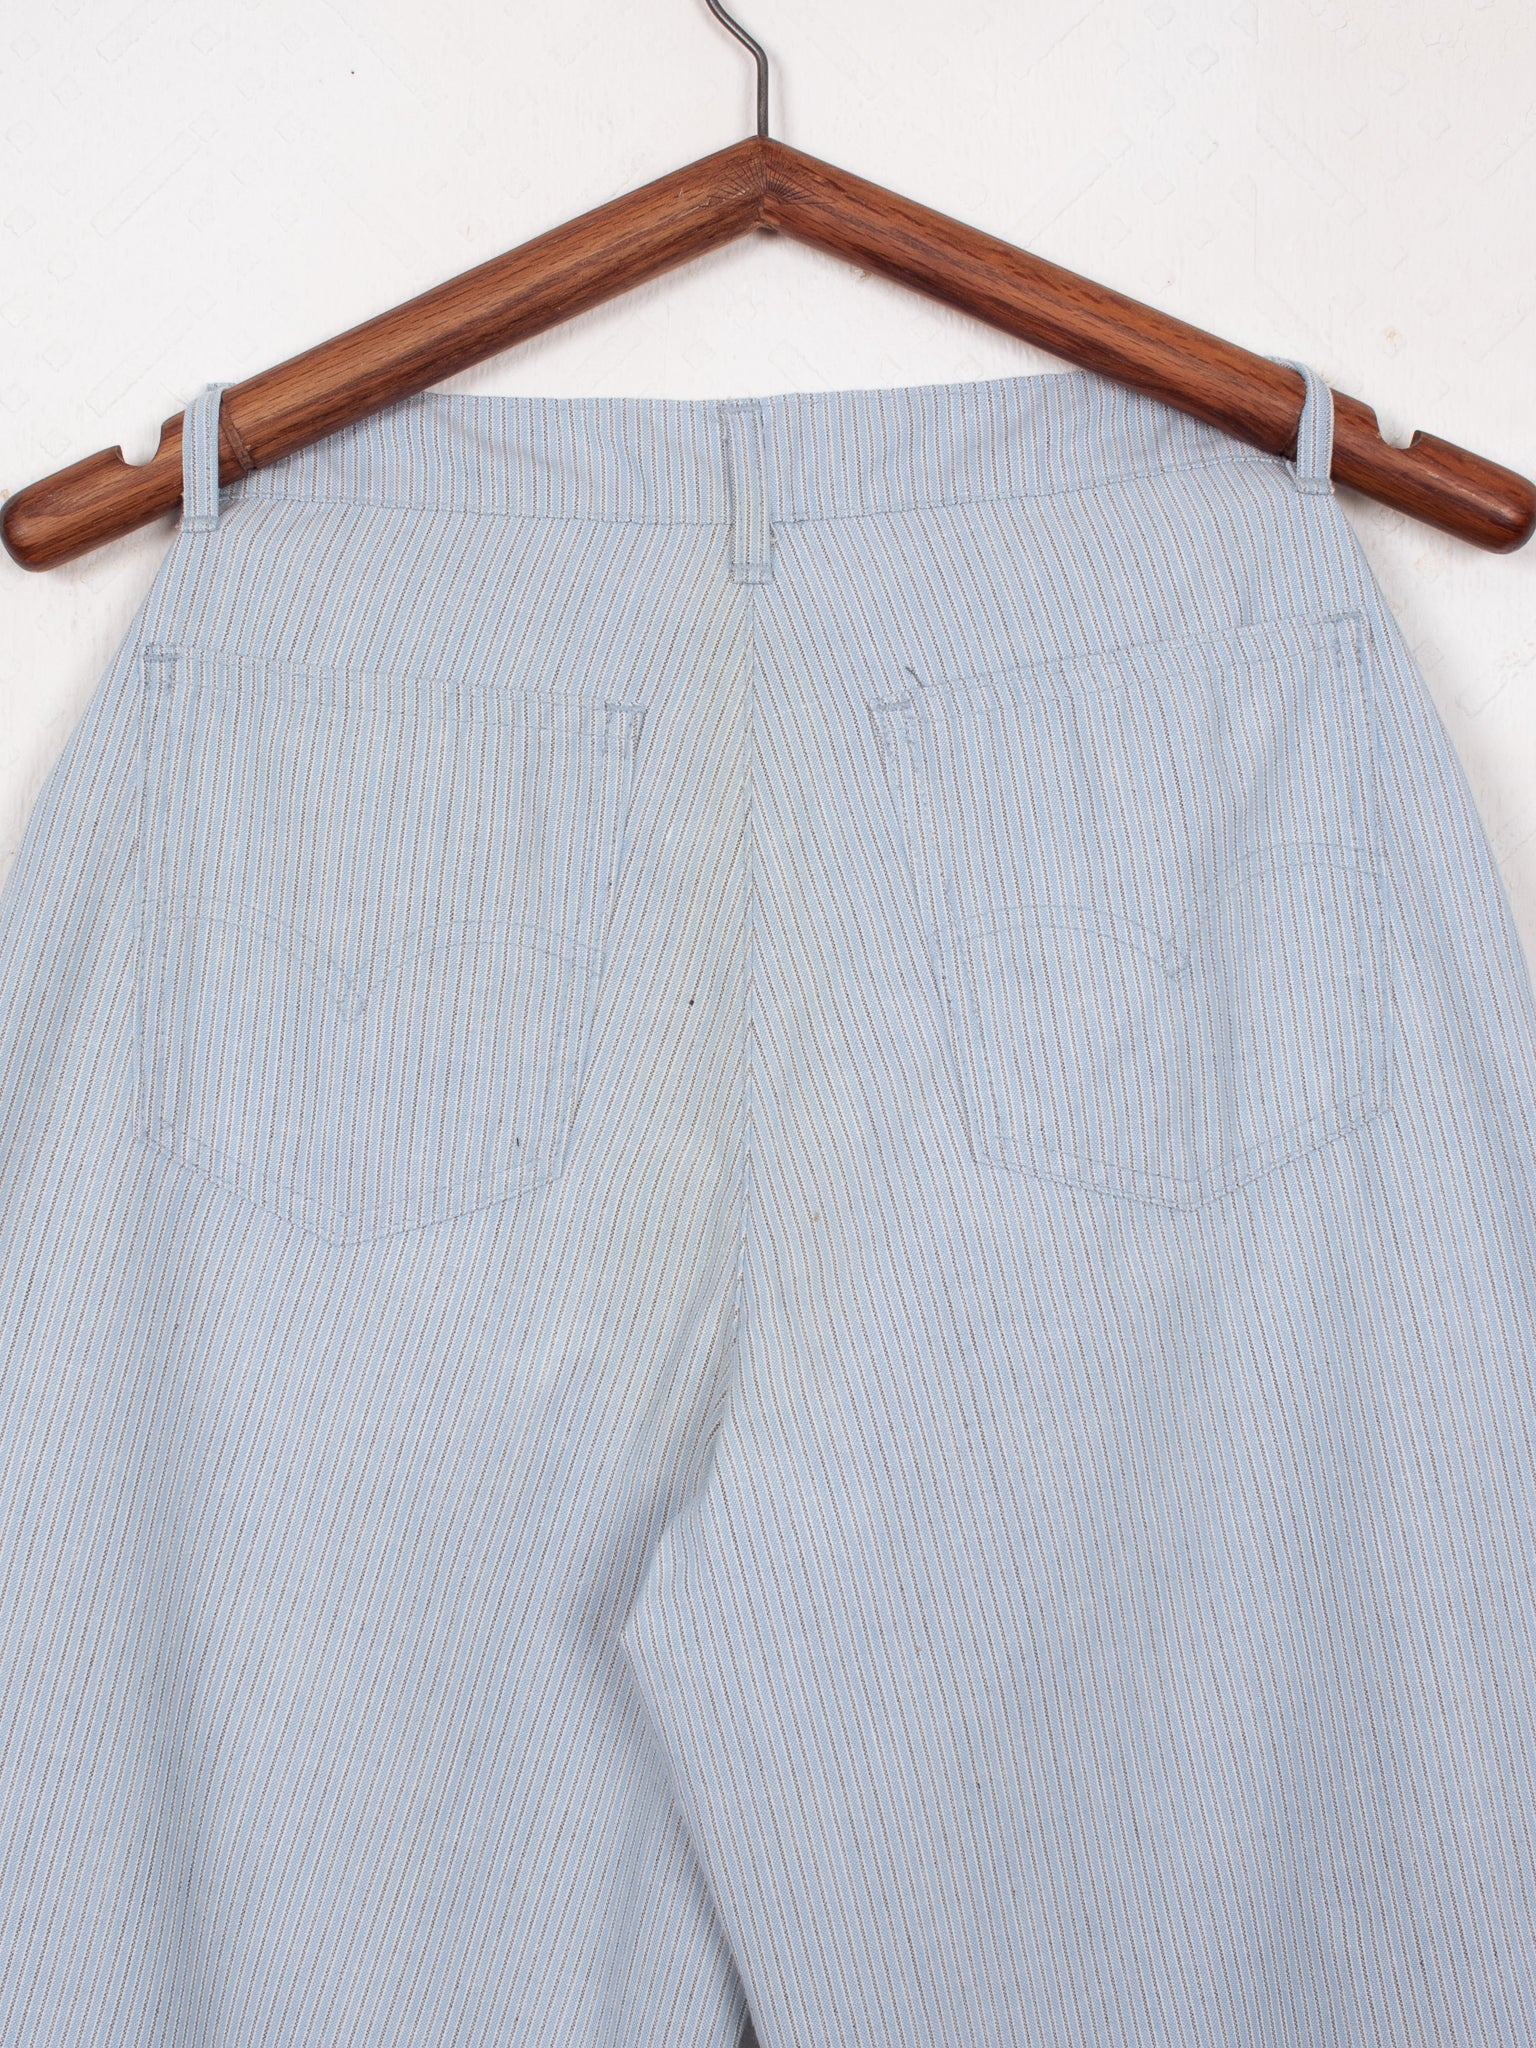 pants & trousers 80s 269 Loose Taper Pants - W29